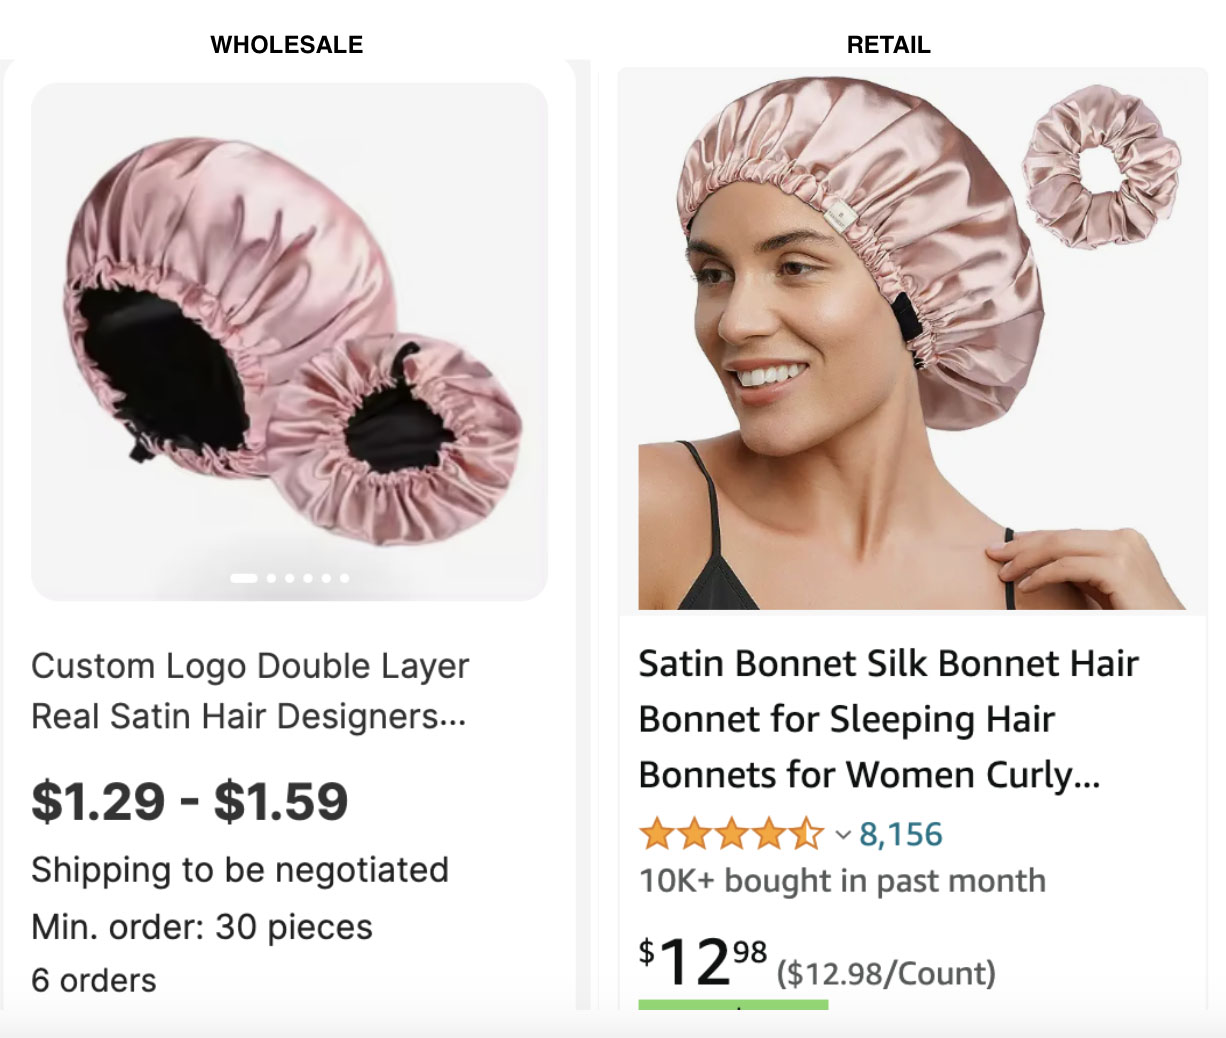 Silk bonnets wholesale Alibaba pricing retail Amazon pricing.